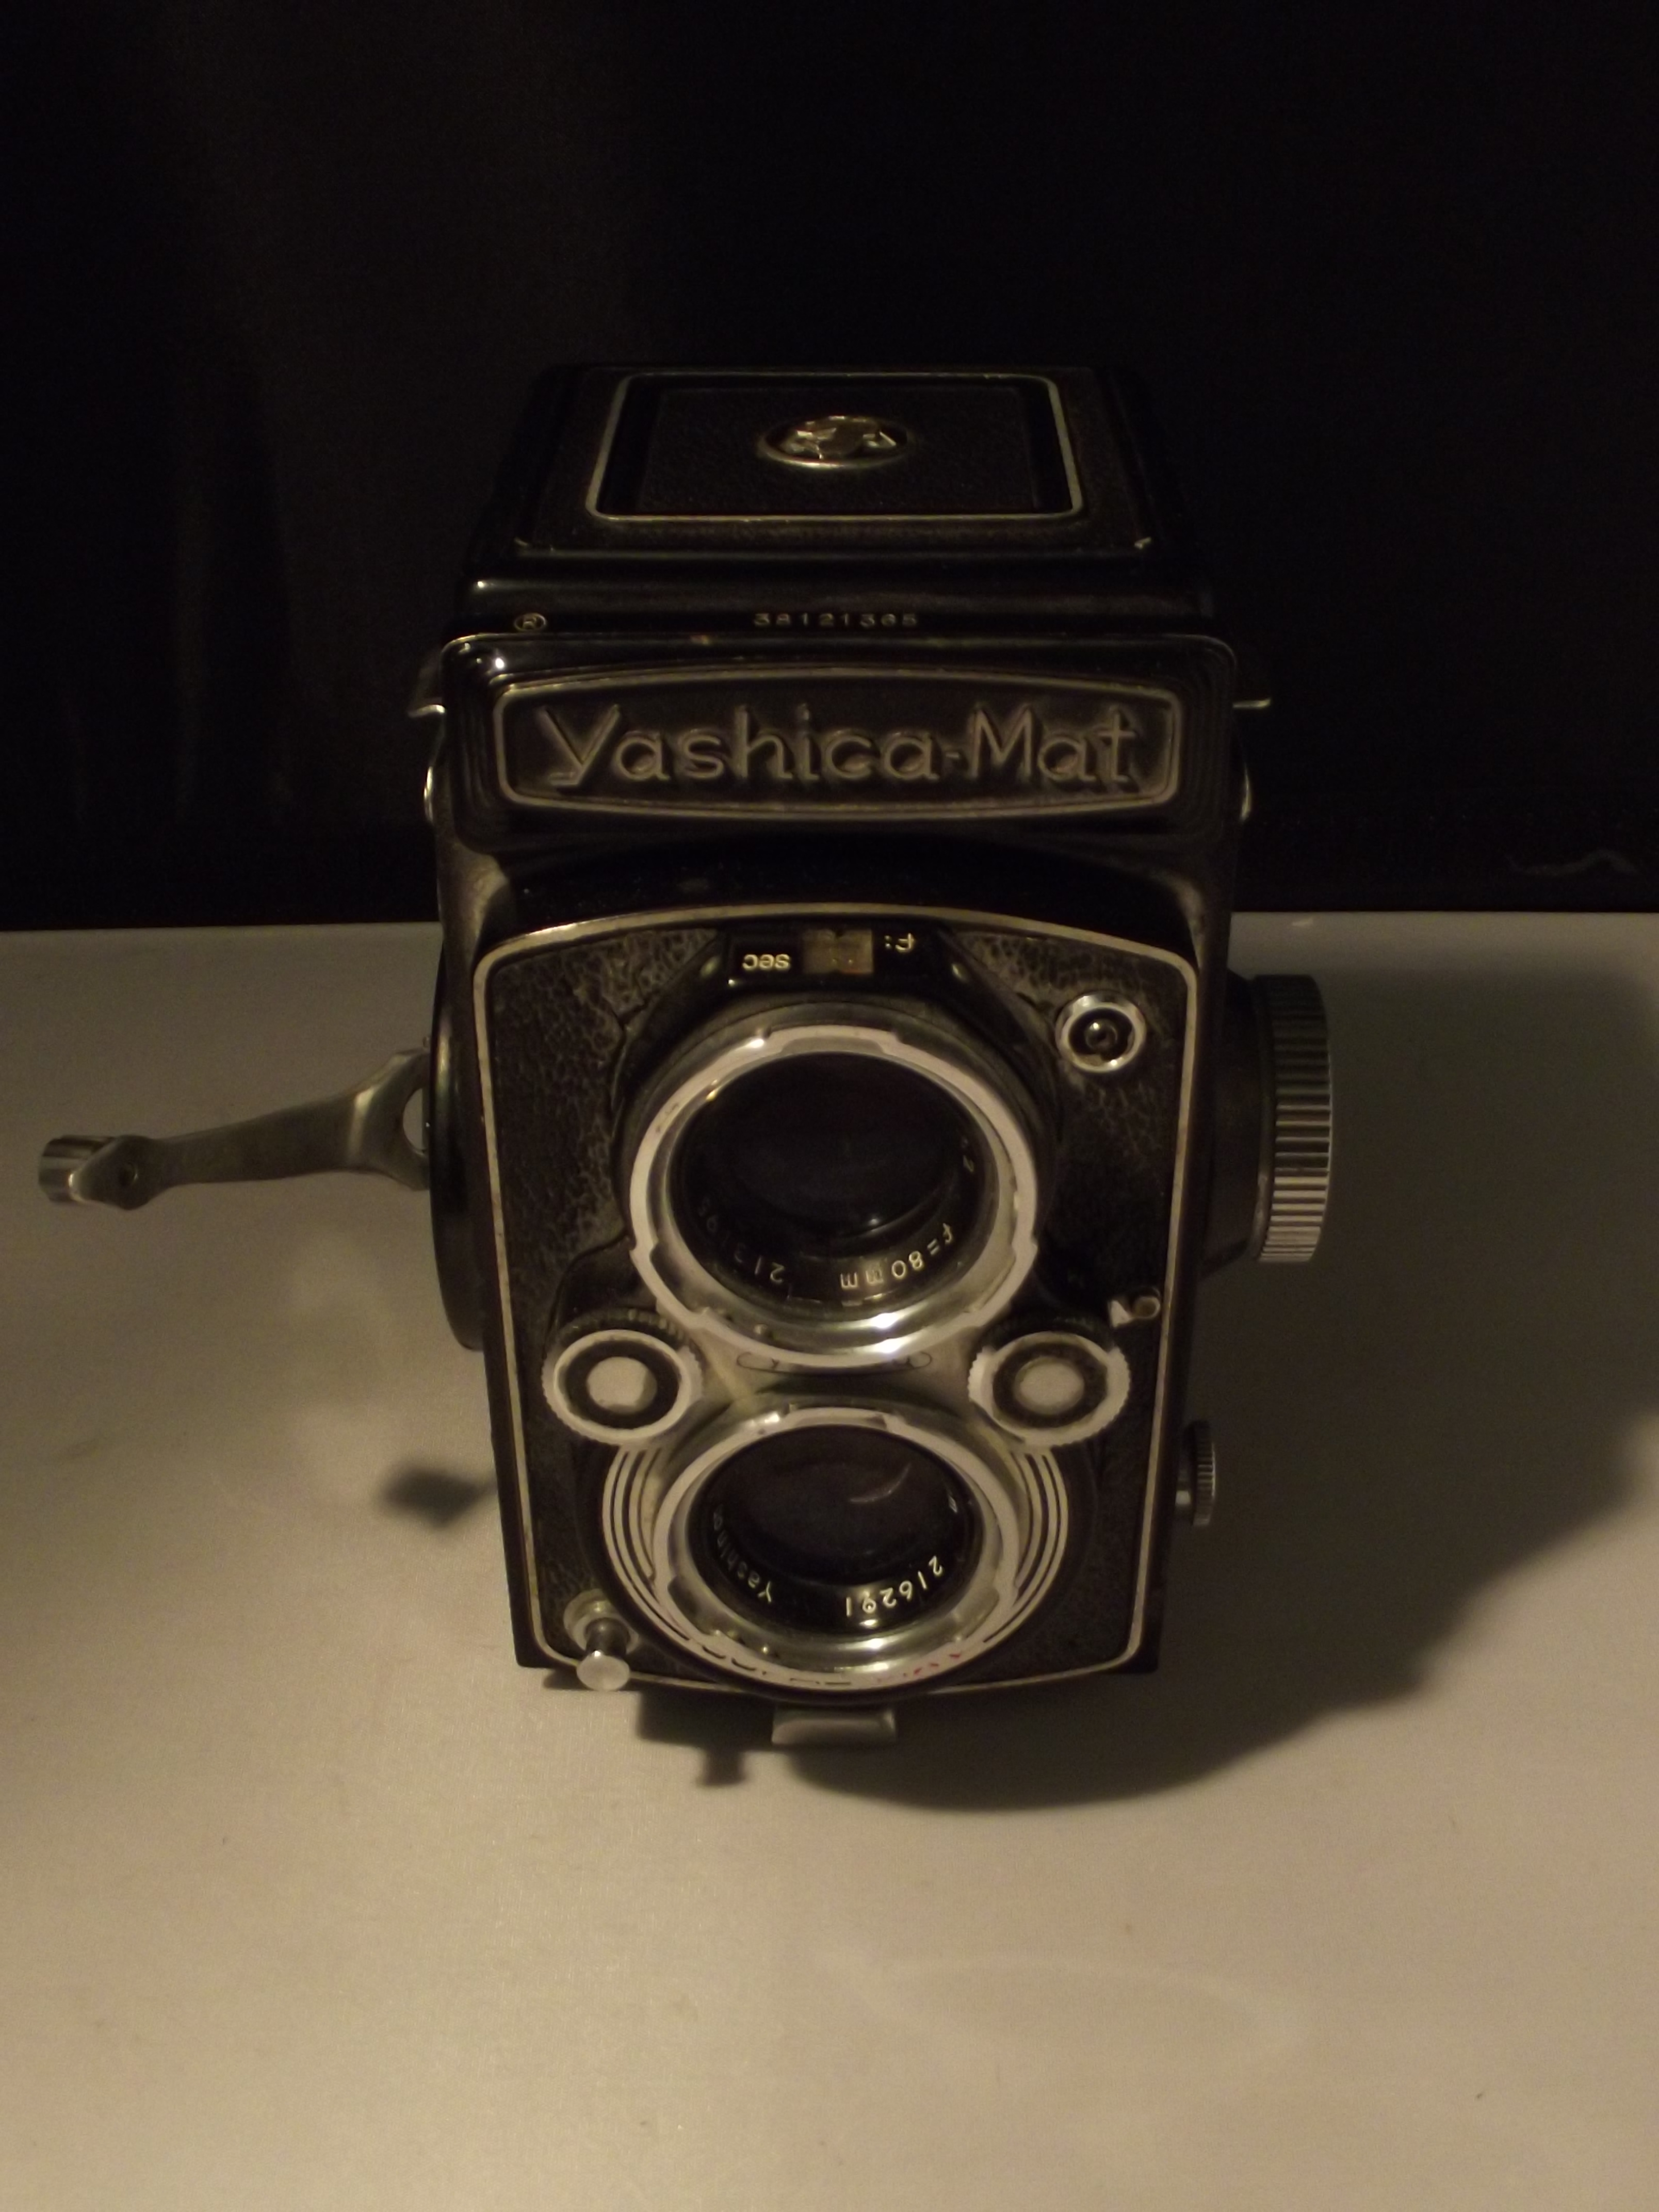 A Yashica-Mat vintage camera